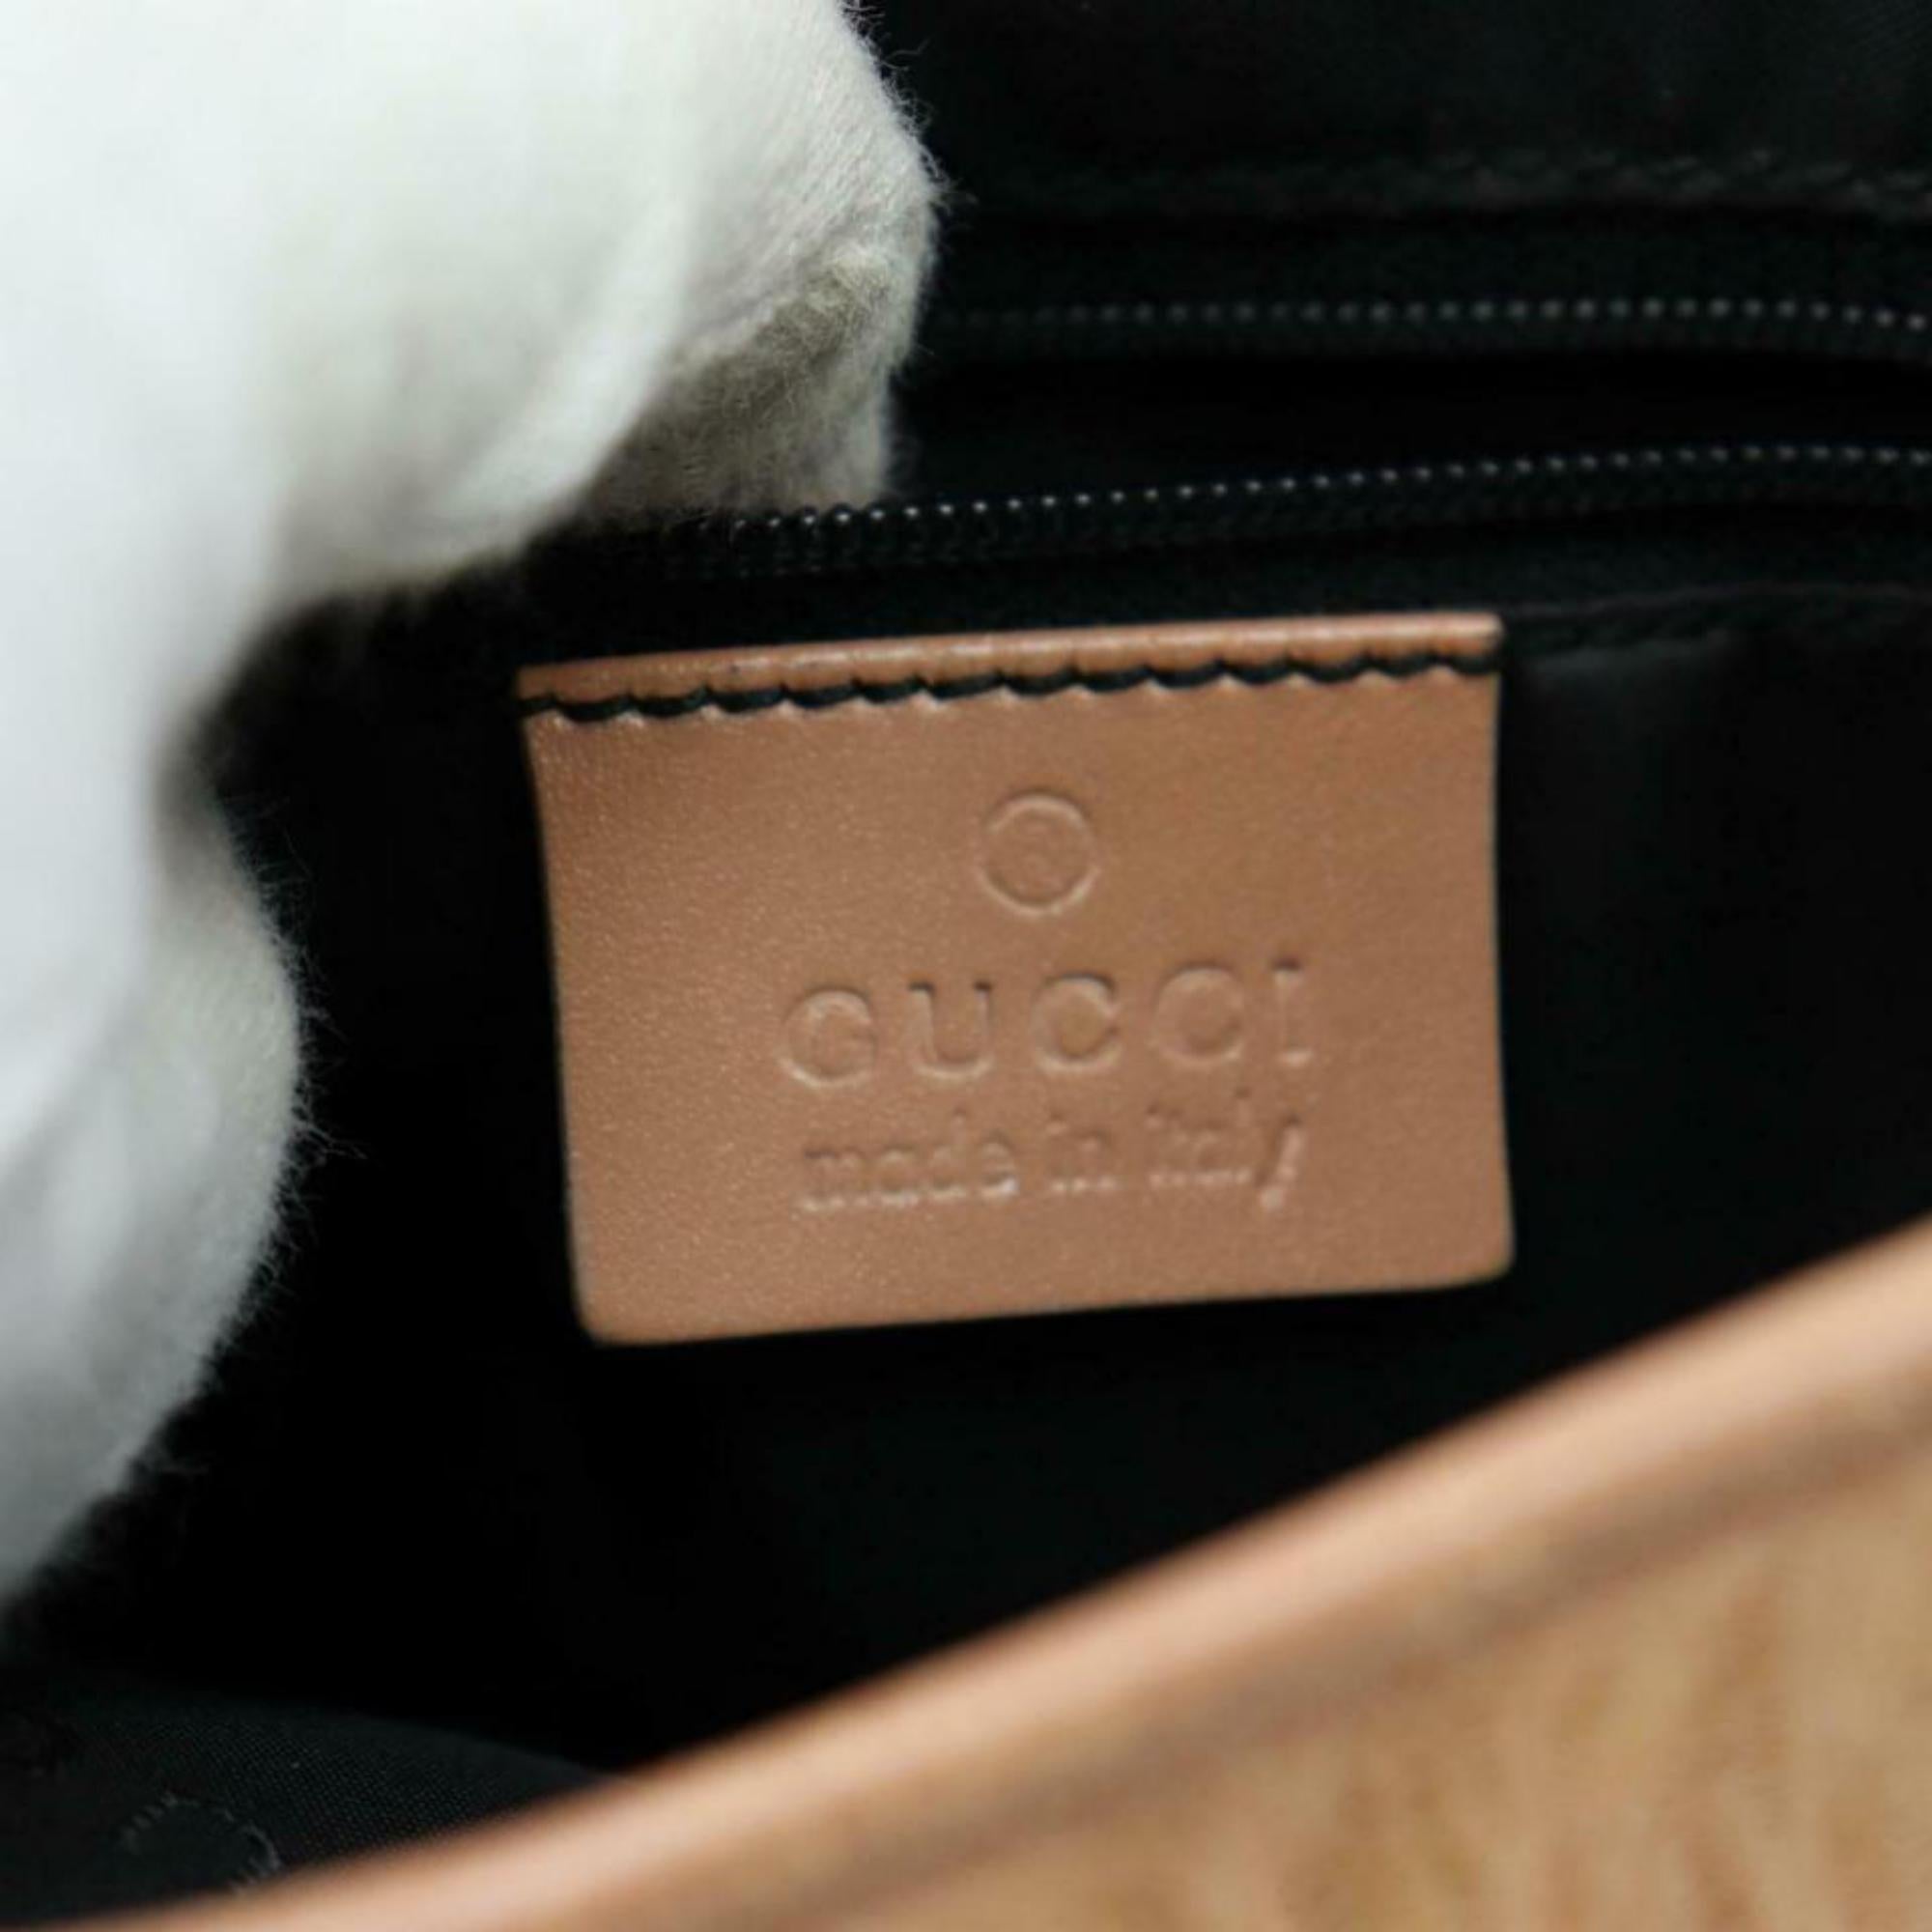 Gucci Jackie Mauve Jackie-o Hobo 870333 Pink Leather Shoulder Bag For Sale 6